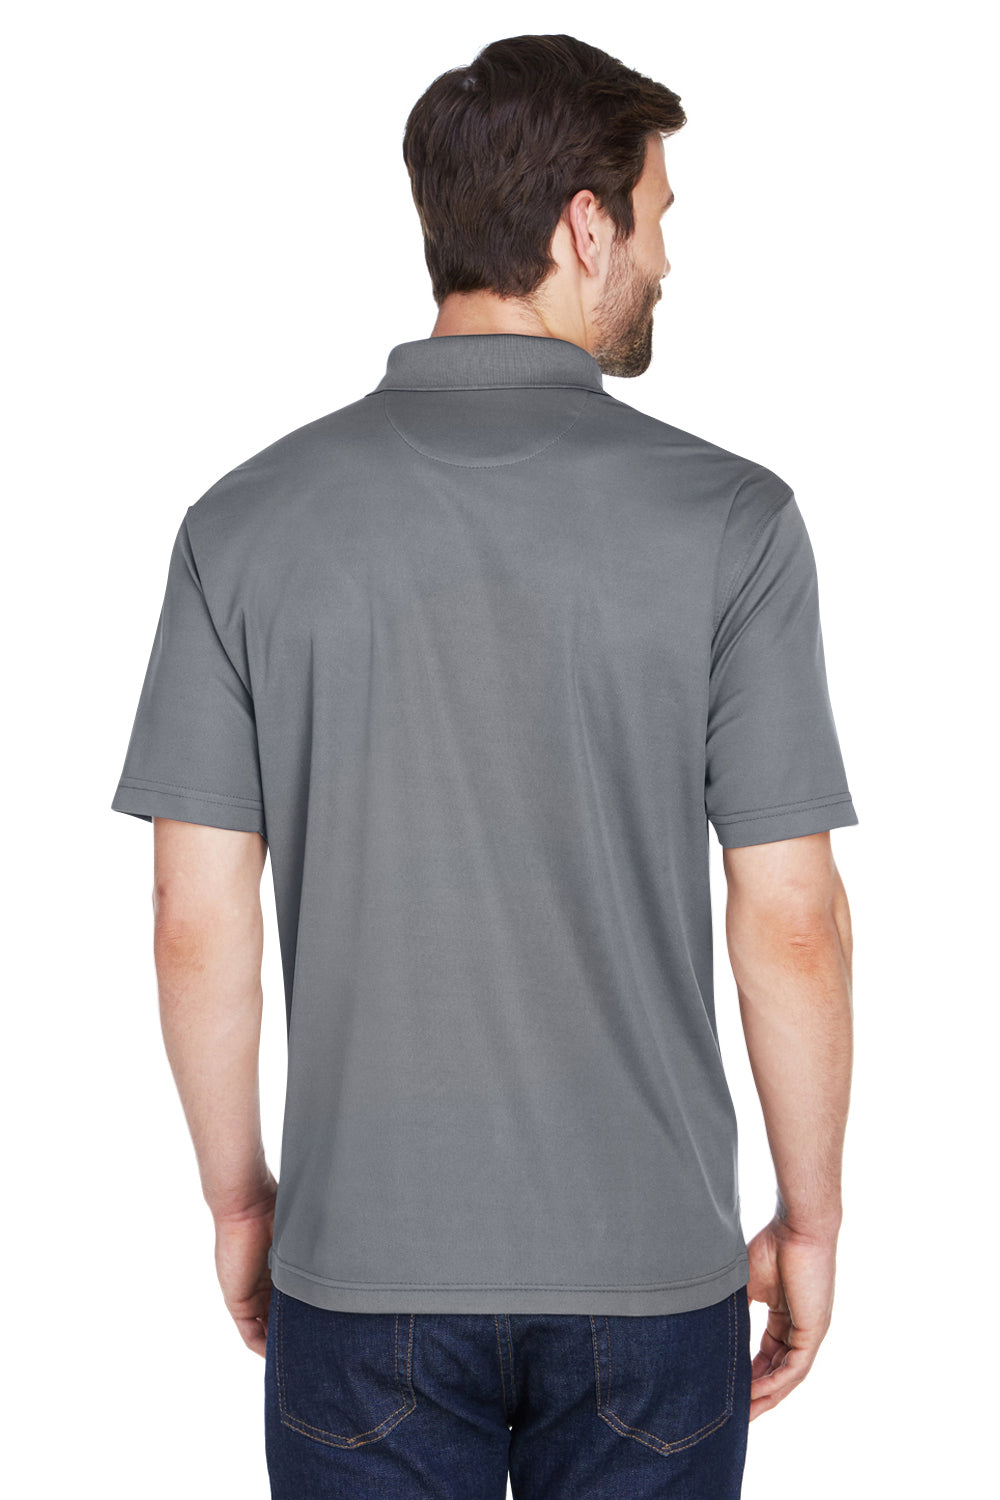 UltraClub 8210 Mens Cool & Dry Moisture Wicking Short Sleeve Polo Shirt Charcoal Grey Back